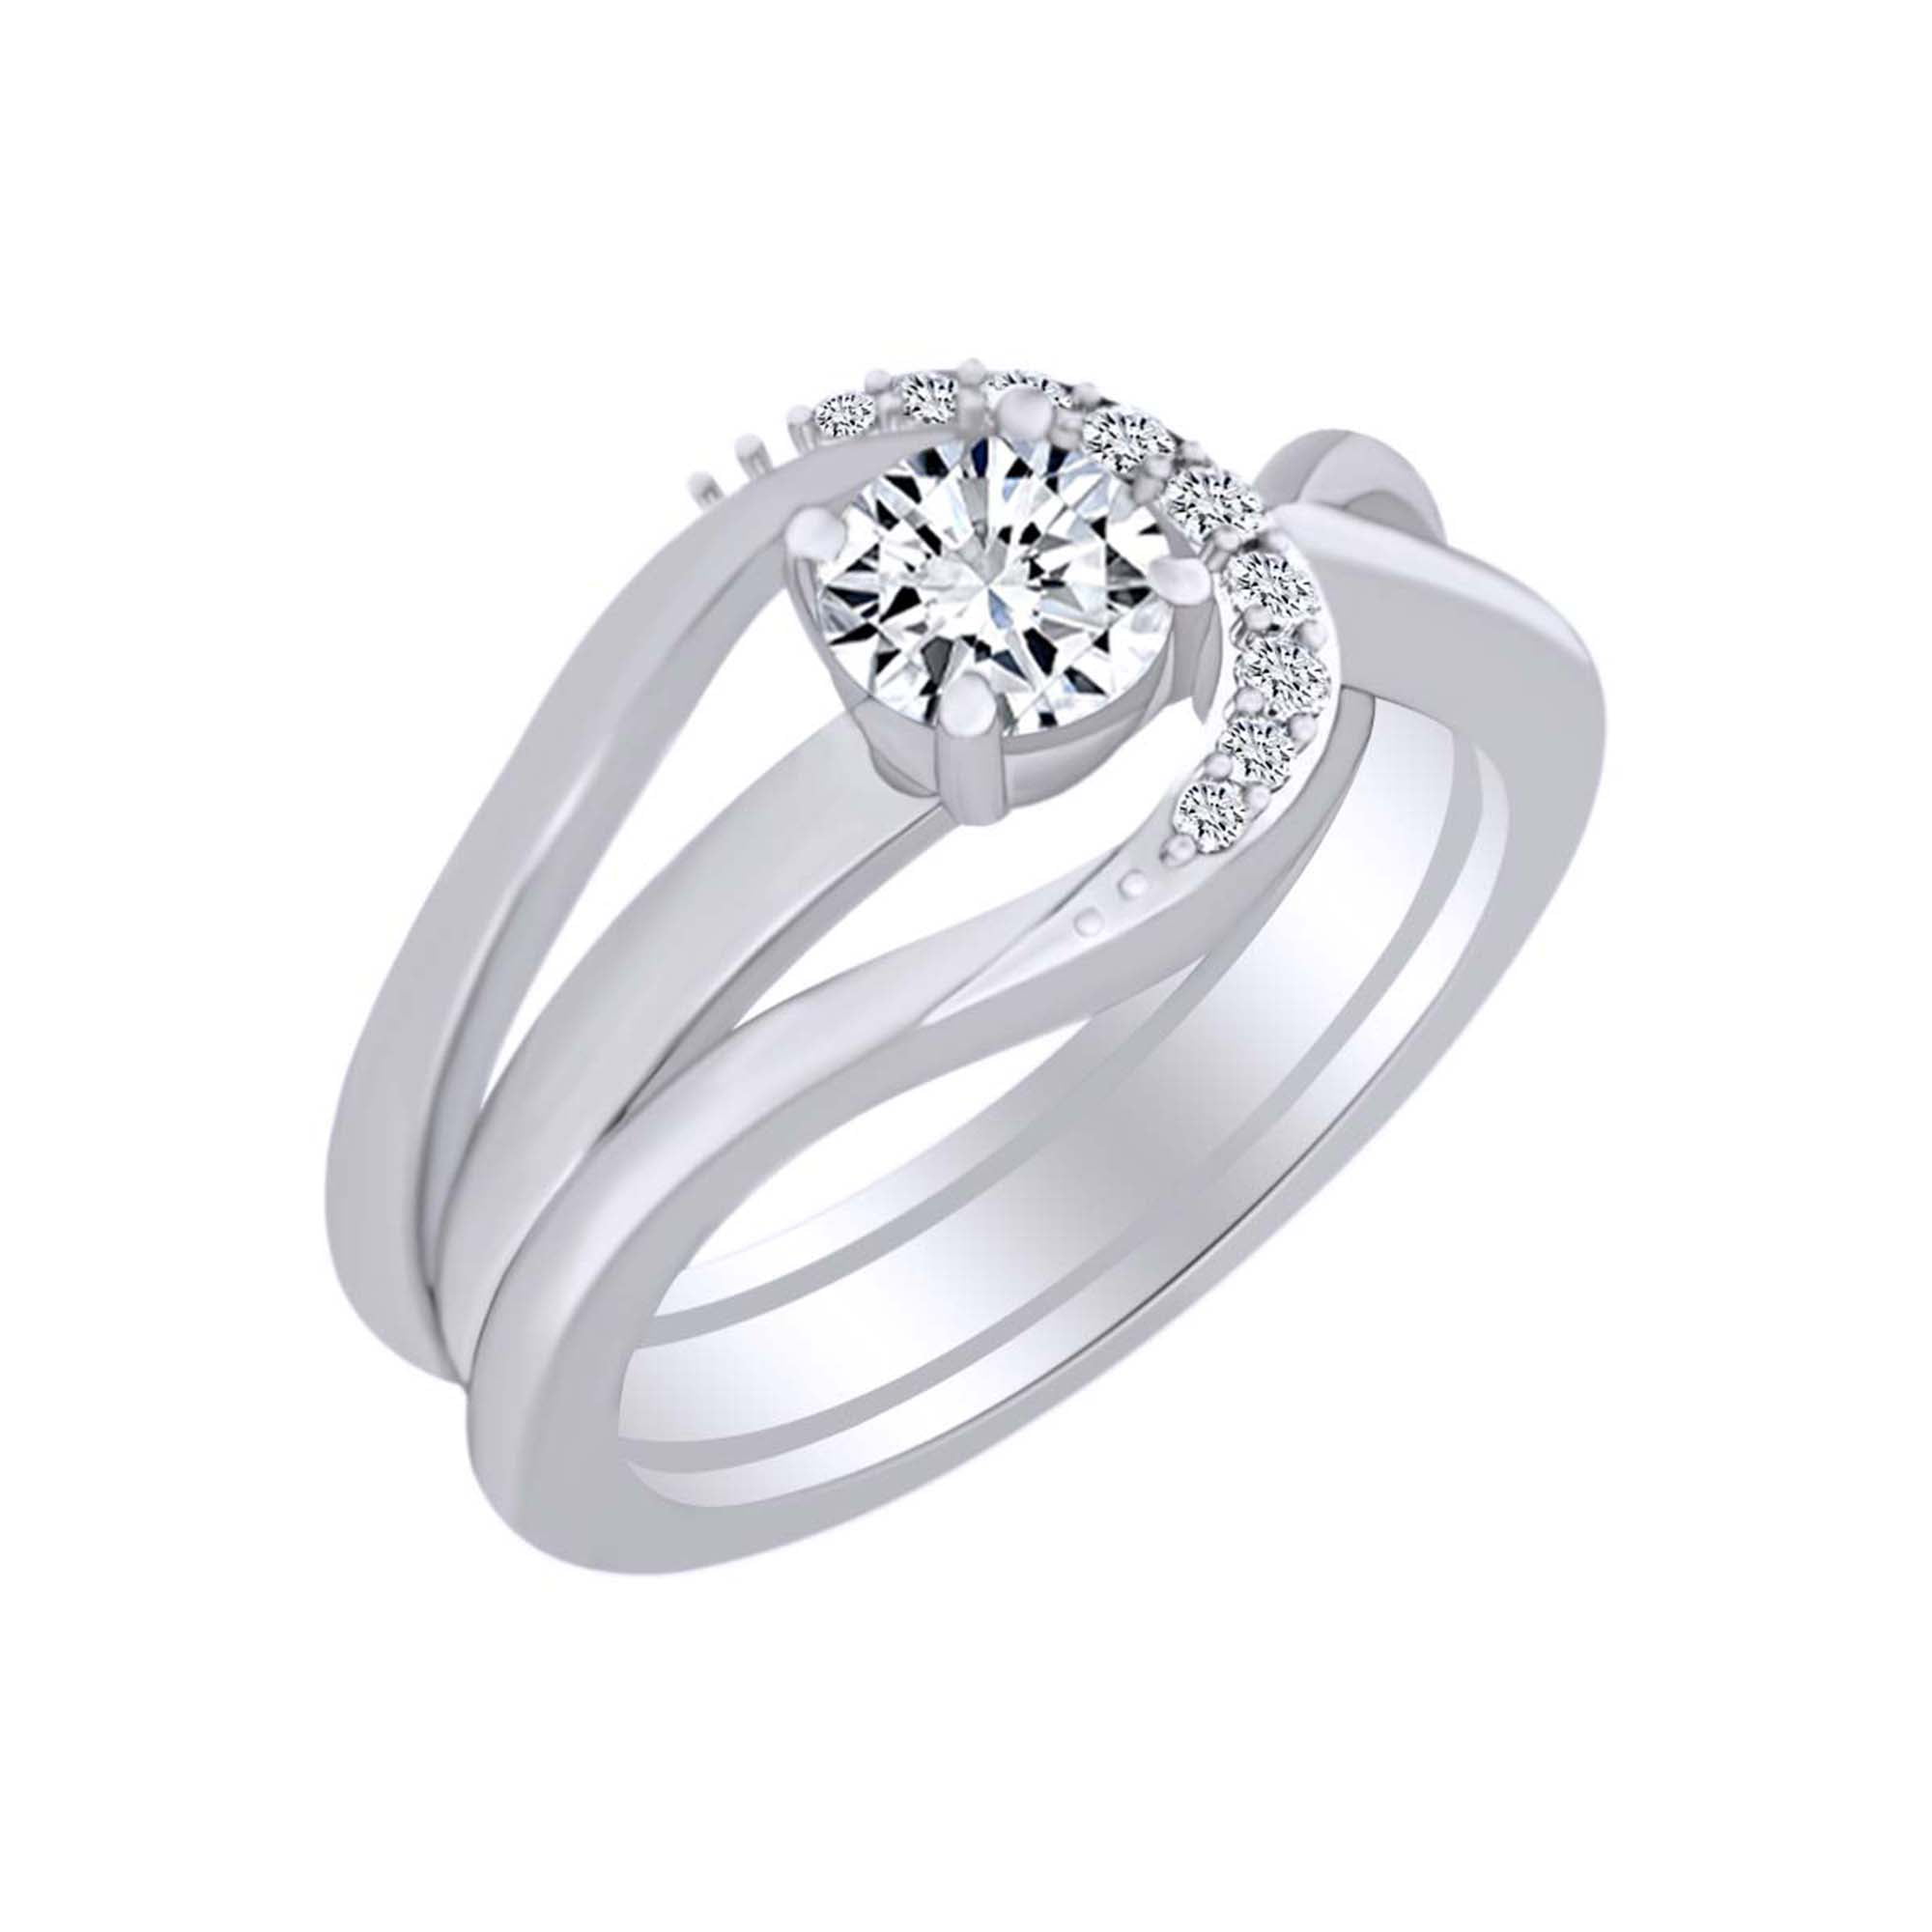 Gorgeous Diamond Paved Wrap Band Ring Women Wedding Engagement Jewelry Size 6.5